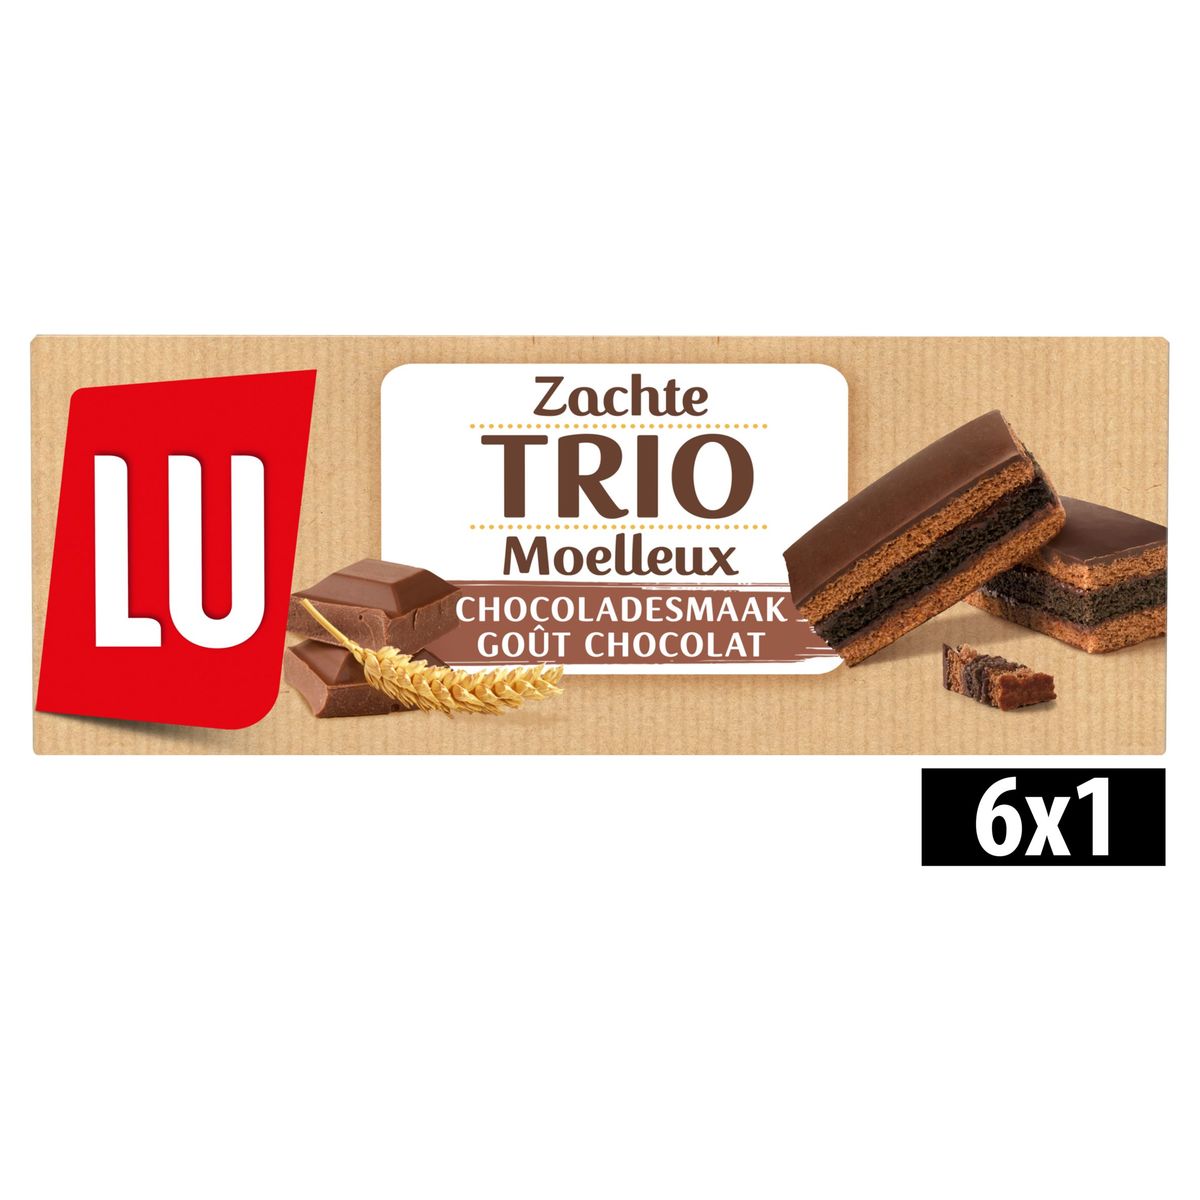 LU Moelleux Trio Gâteaux Au Chocolat 174 g